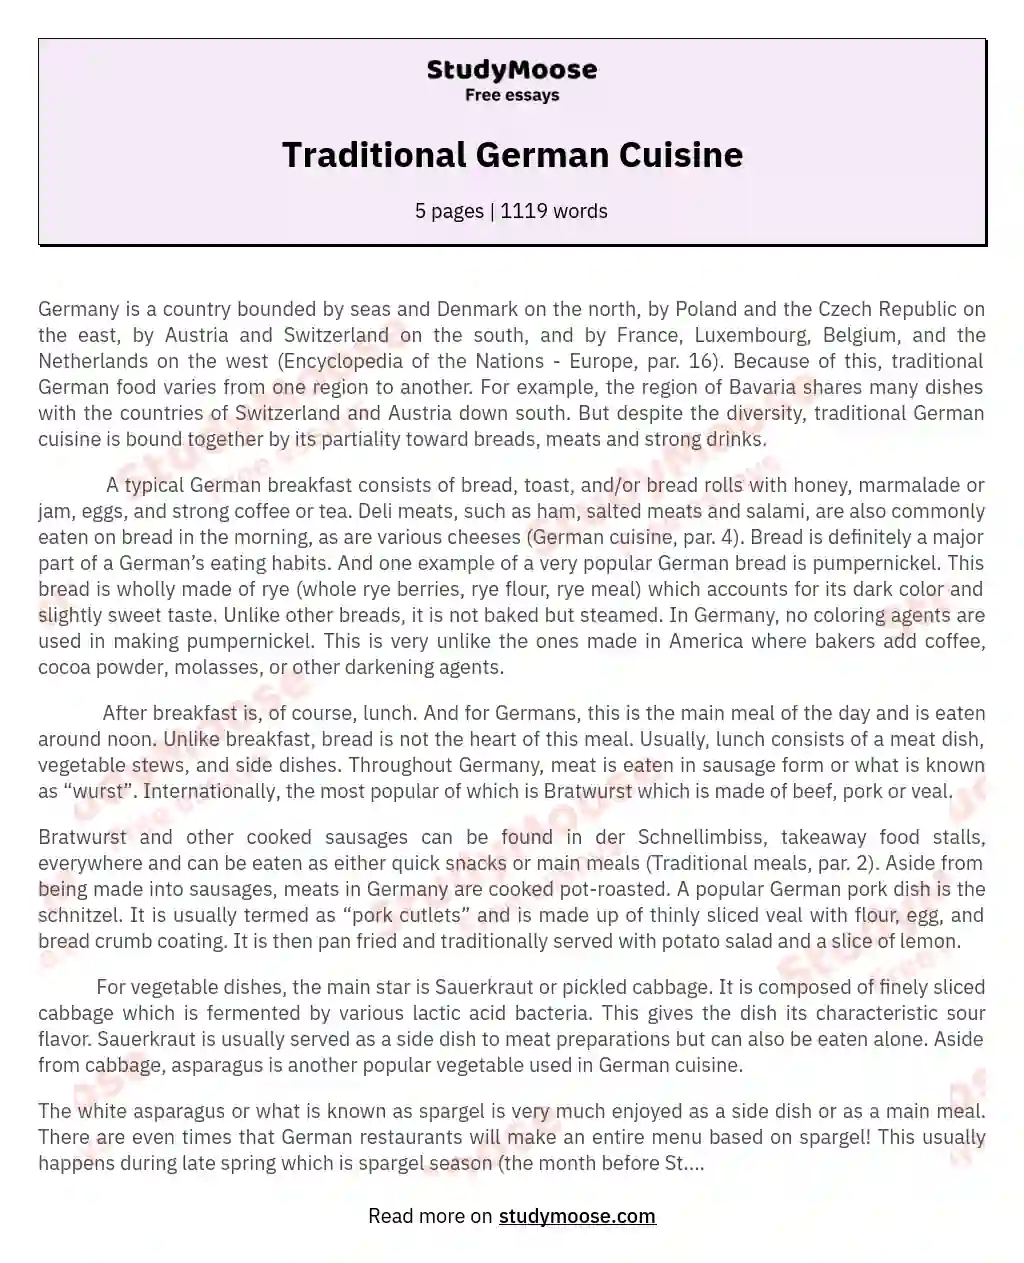 Traditional German Cuisine essay